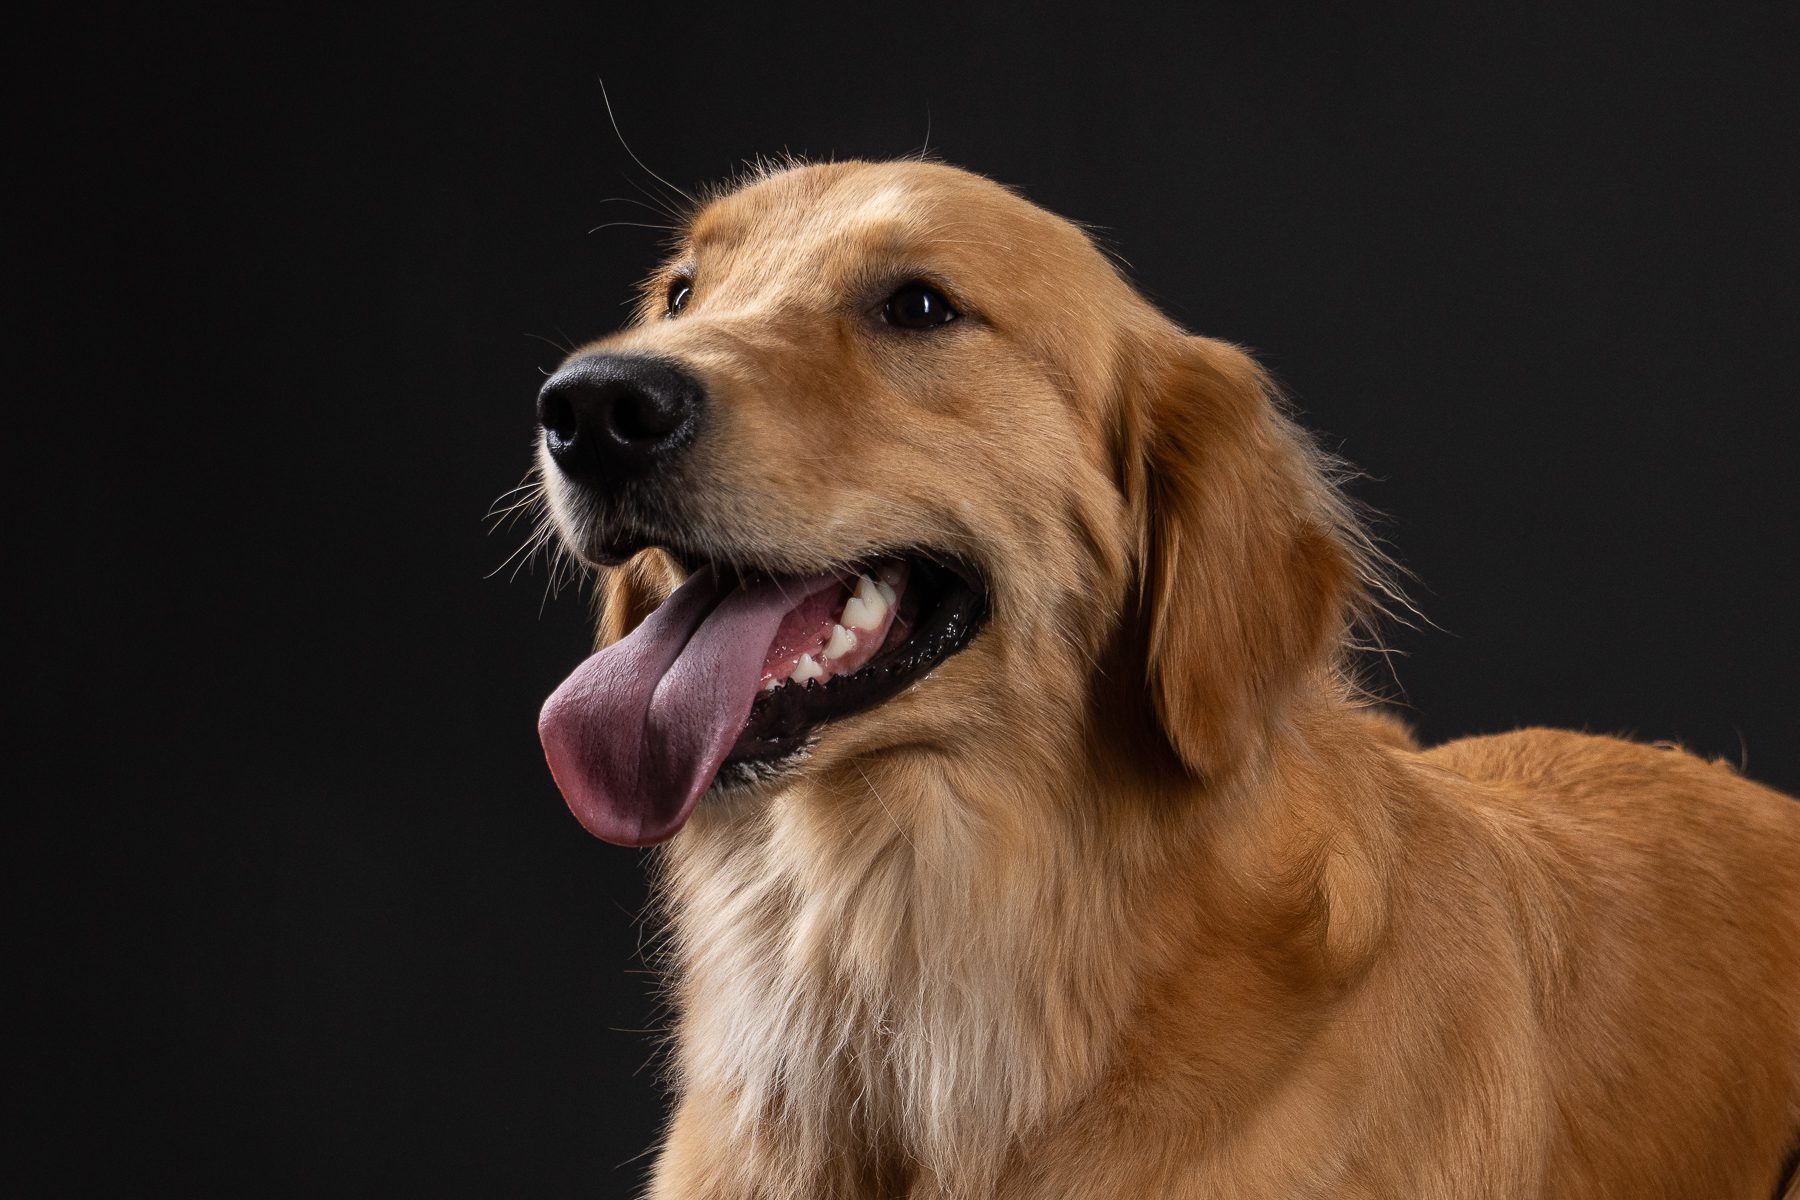 Golden dog portrait